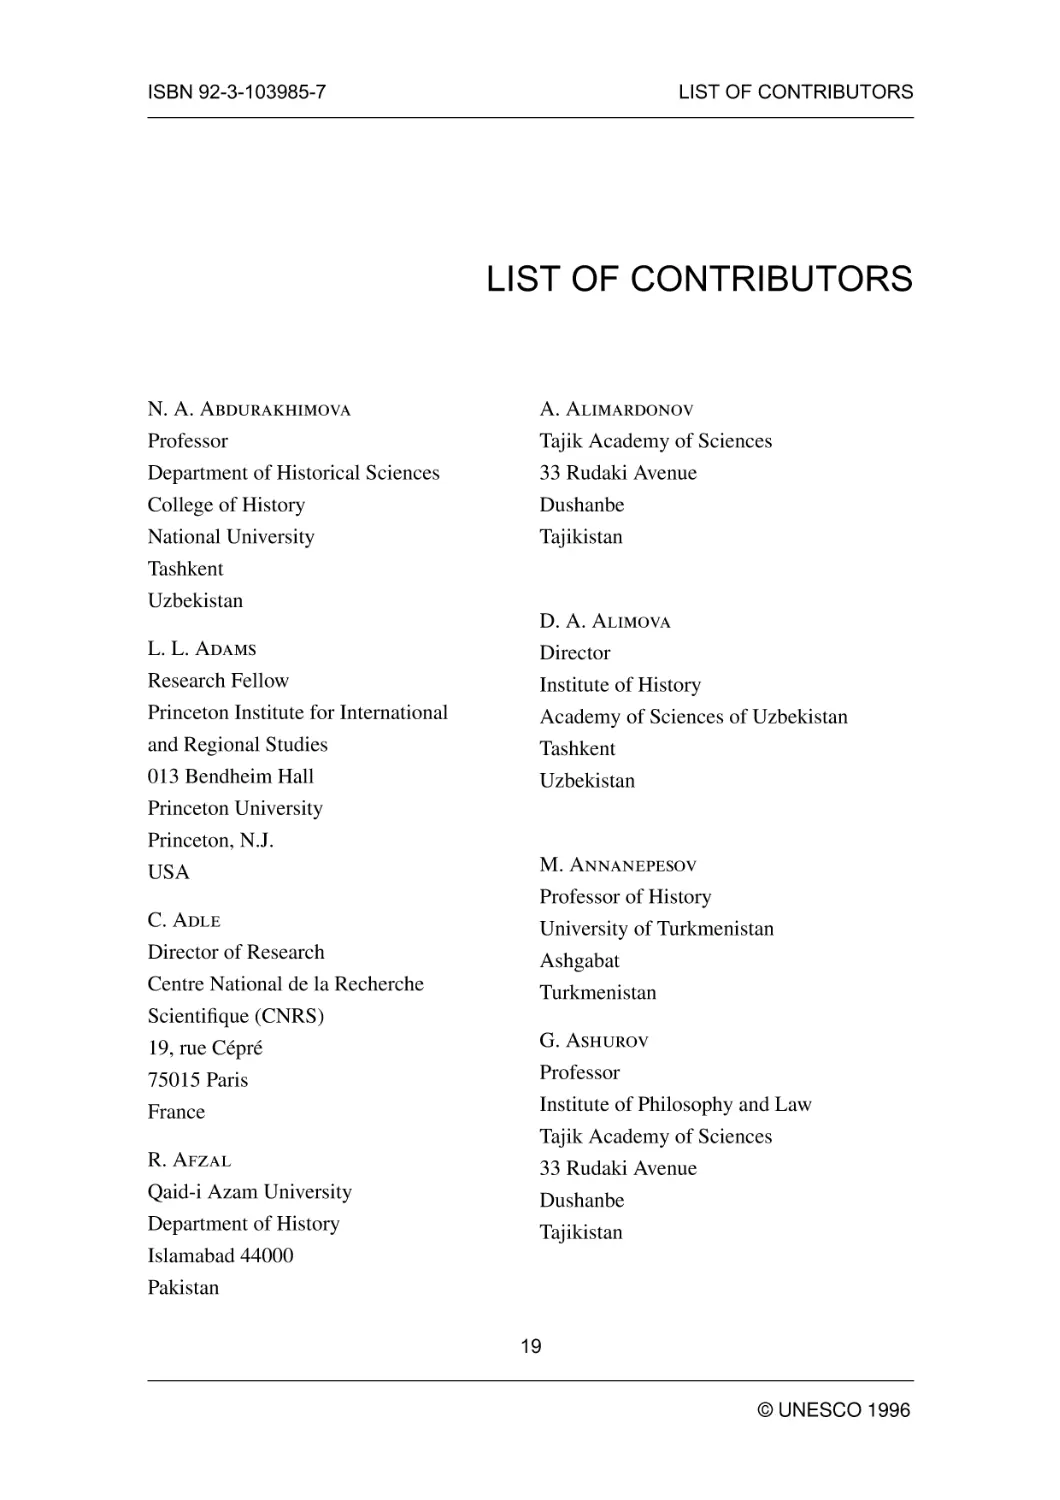 LIST OF CONTRIBUTORS